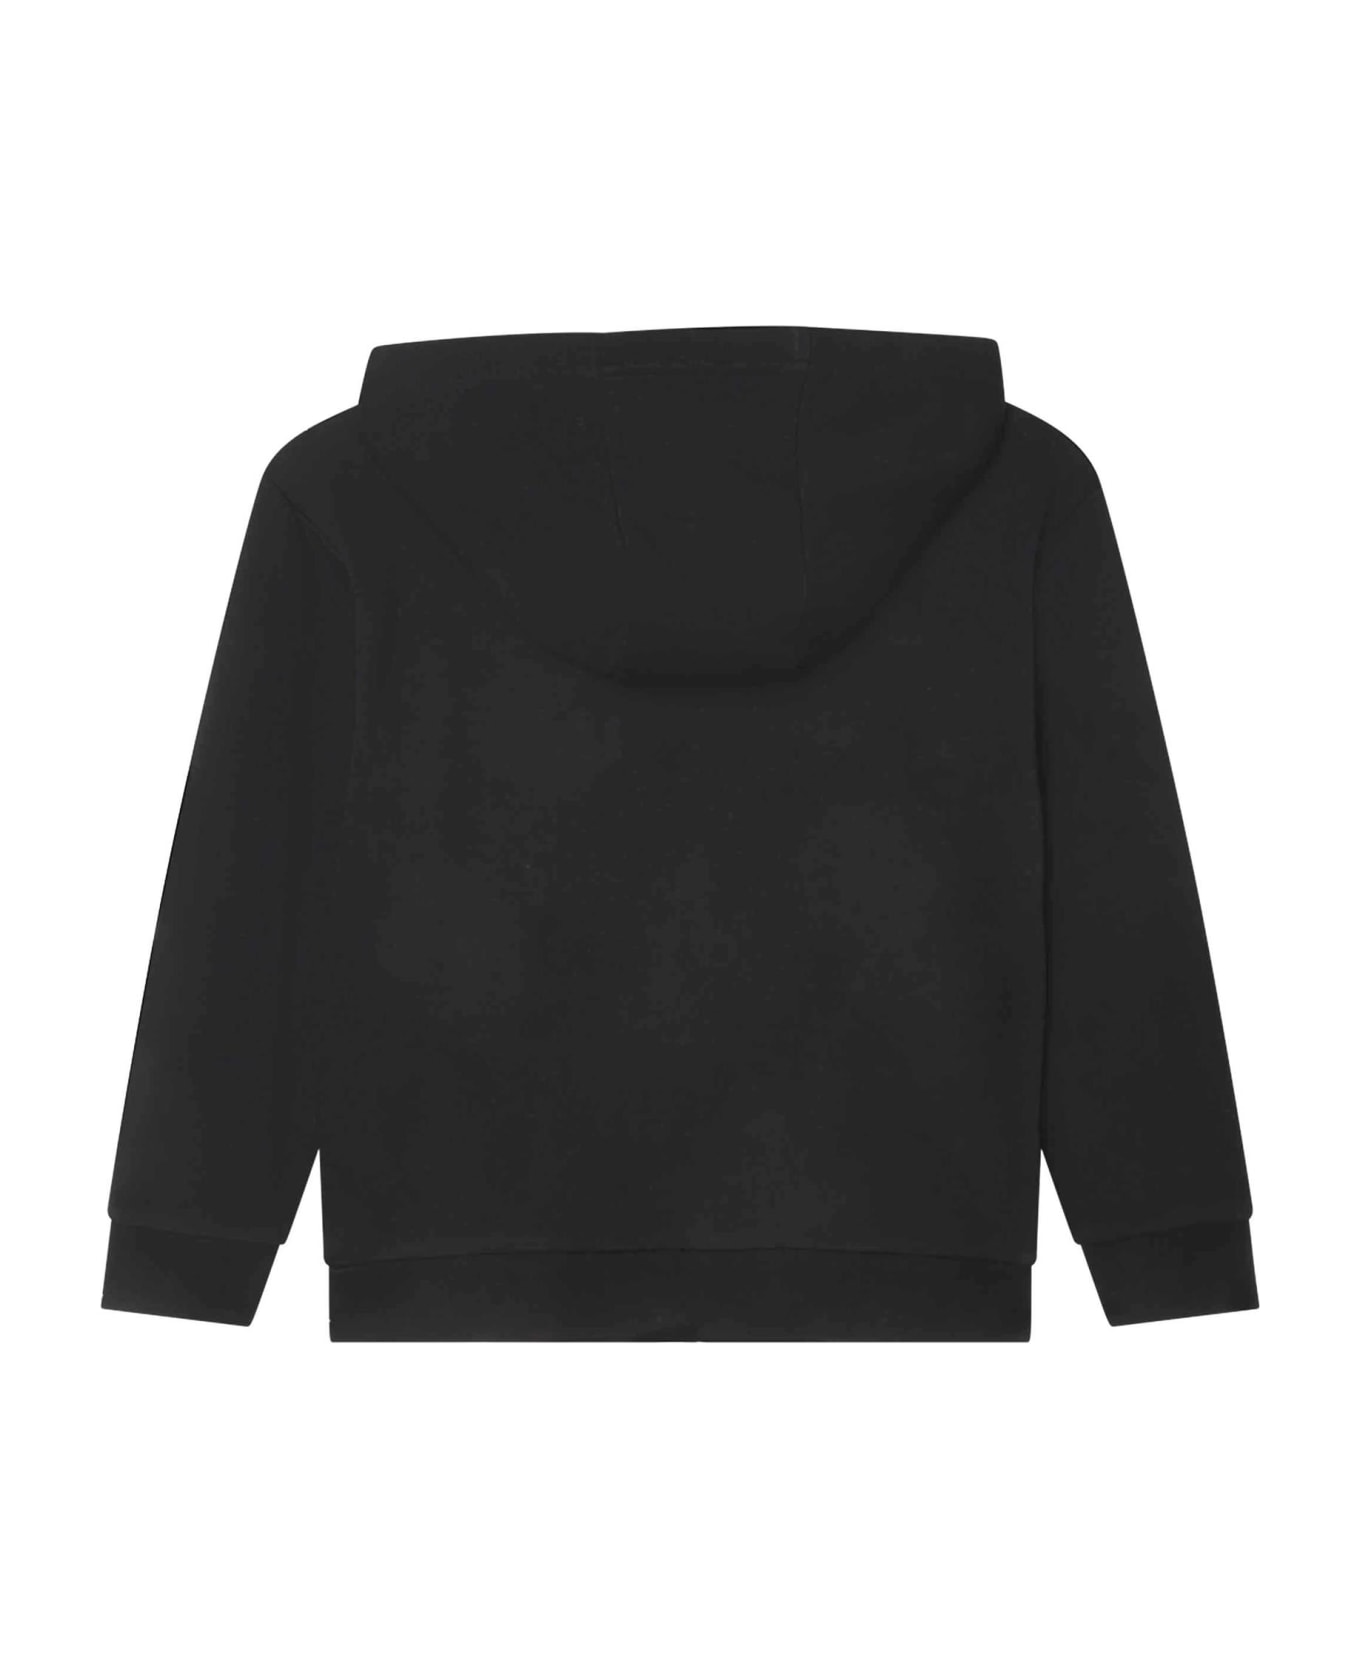 DKNY Sweatshirt With Logo - Black